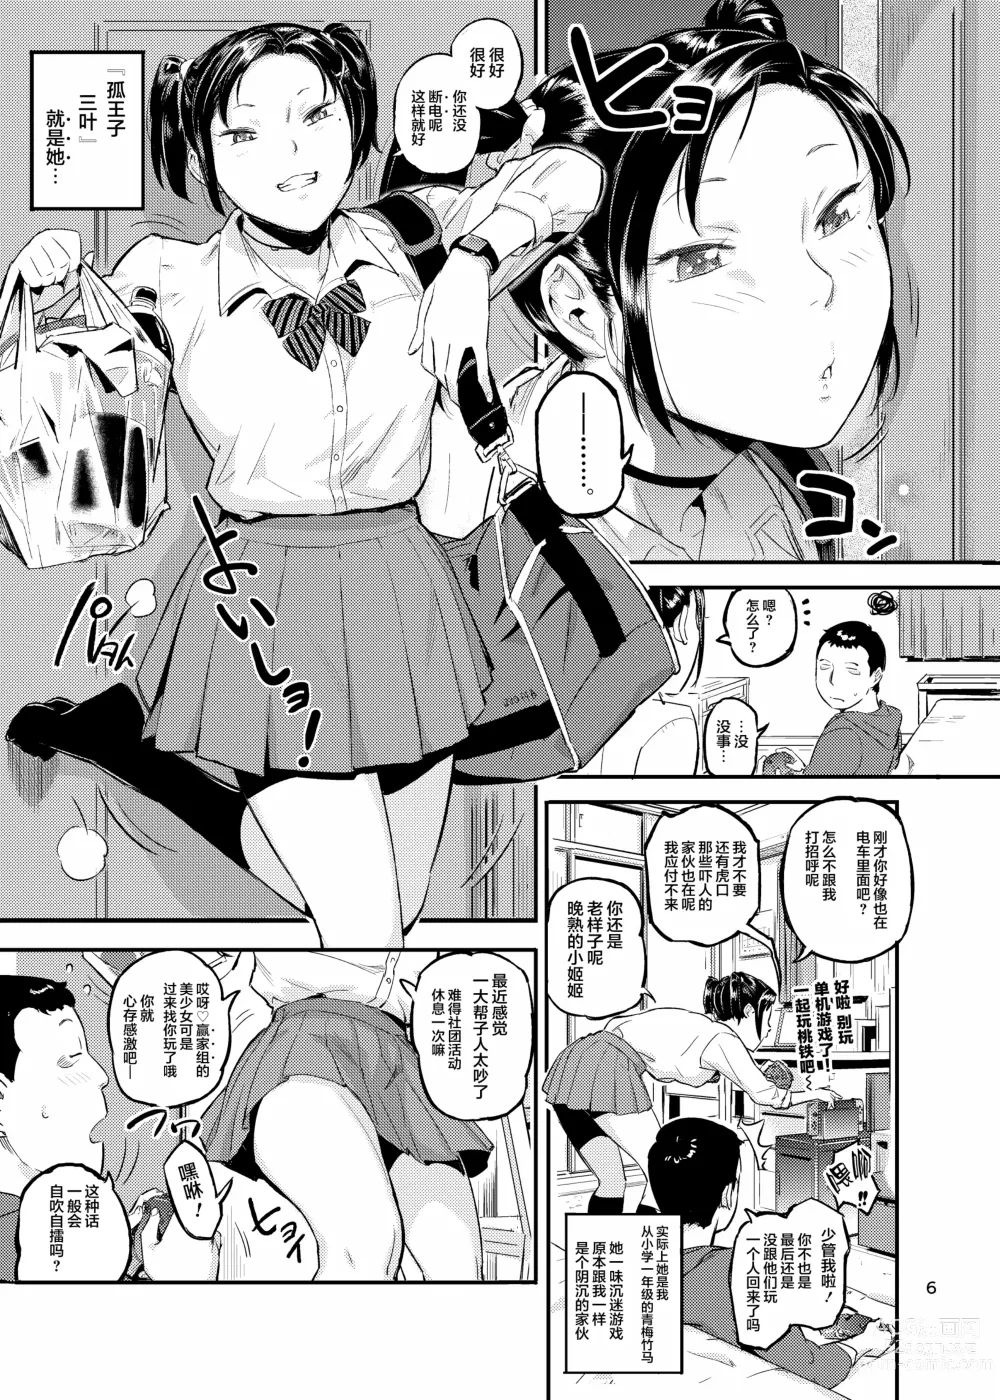 Page 6 of doujinshi 涎みつばッ!